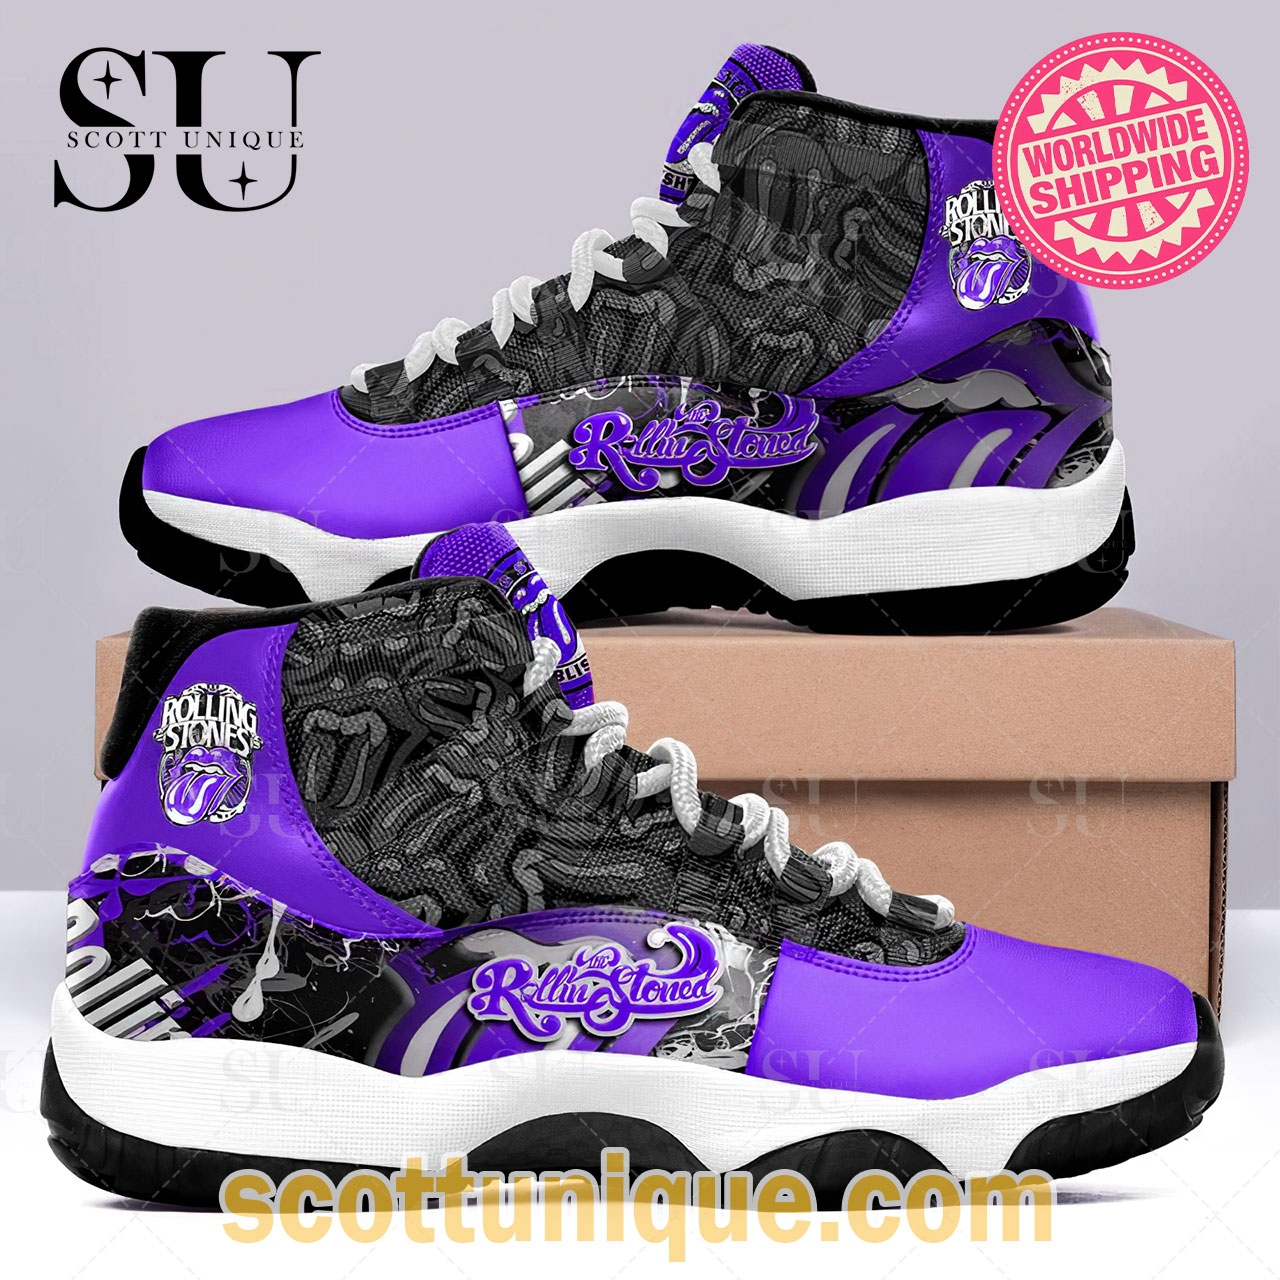 The Rolling Stones Purple Graffiti Unique Air Jordan 11 Sneaker